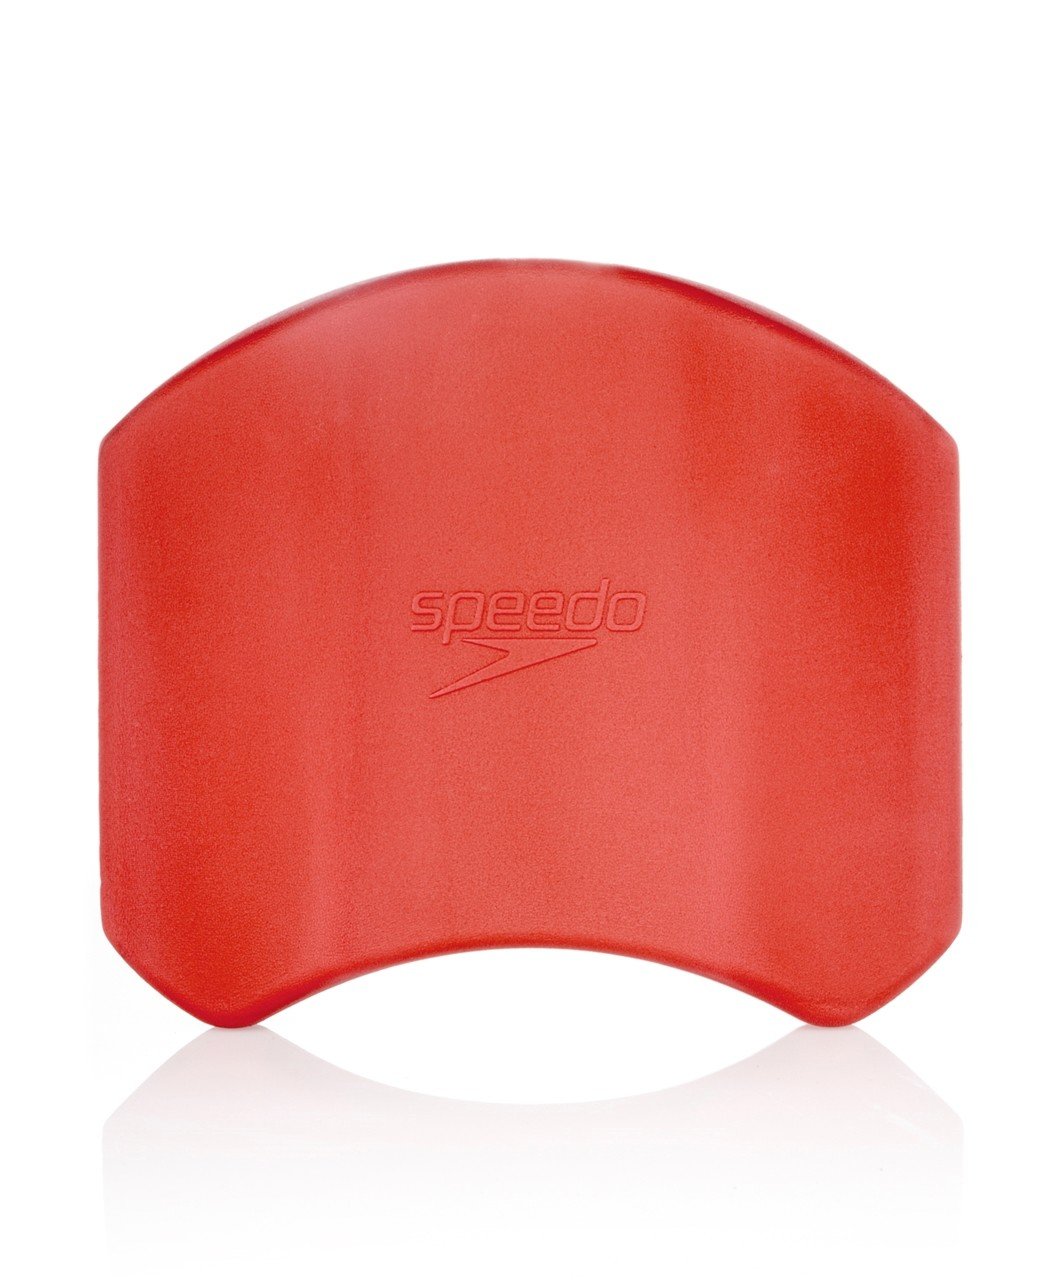  Phụ kiện bơi Speedo 8-017900004 Elite Pullkick Red 8-017900004 (Đỏ ) 